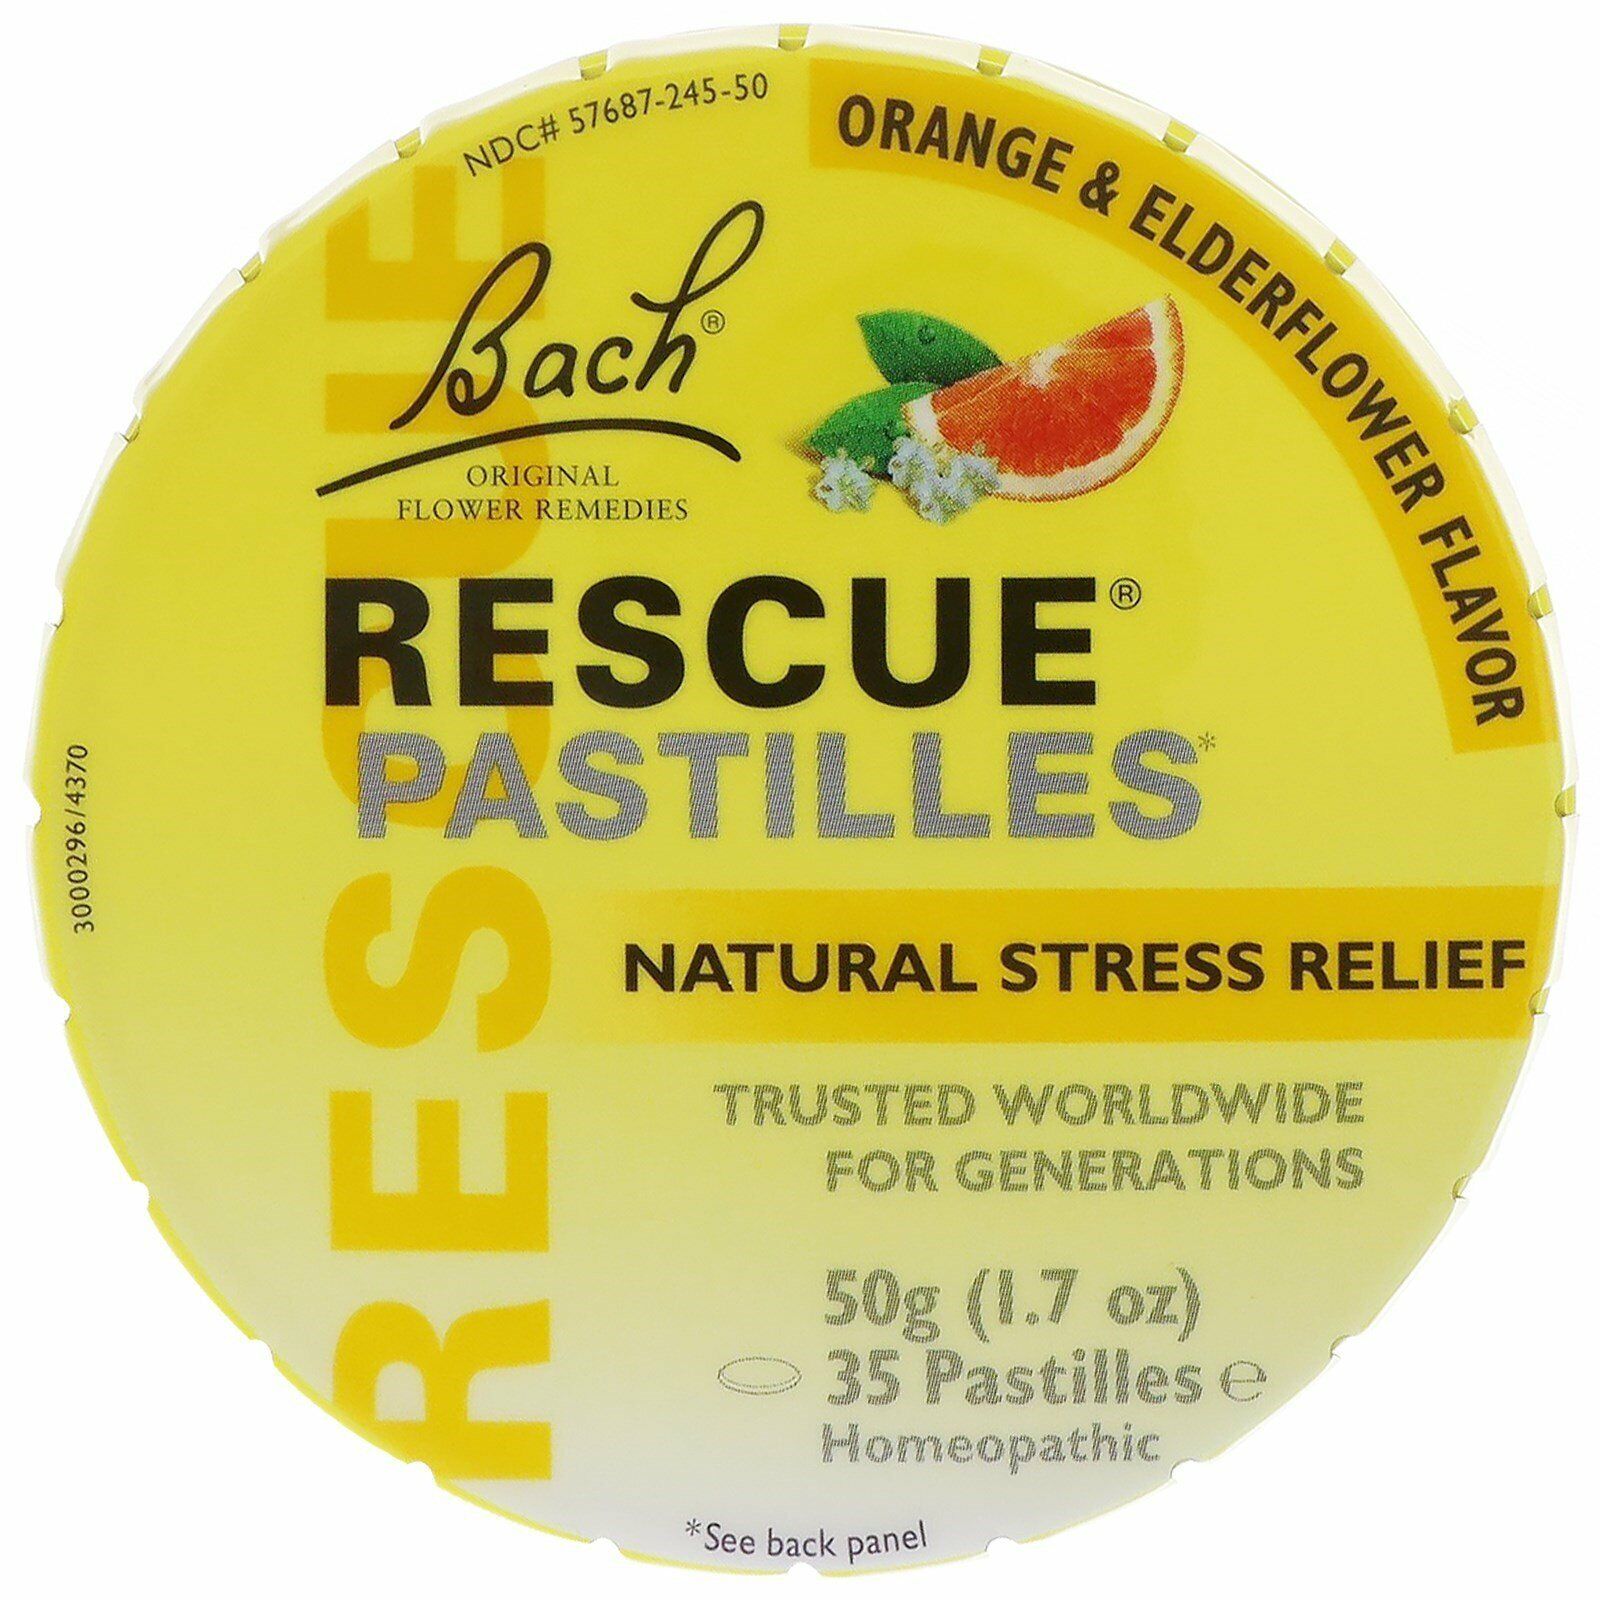 Original Flower Remedies, Rescue Pastilles, Natural Stress Relief, Orange &